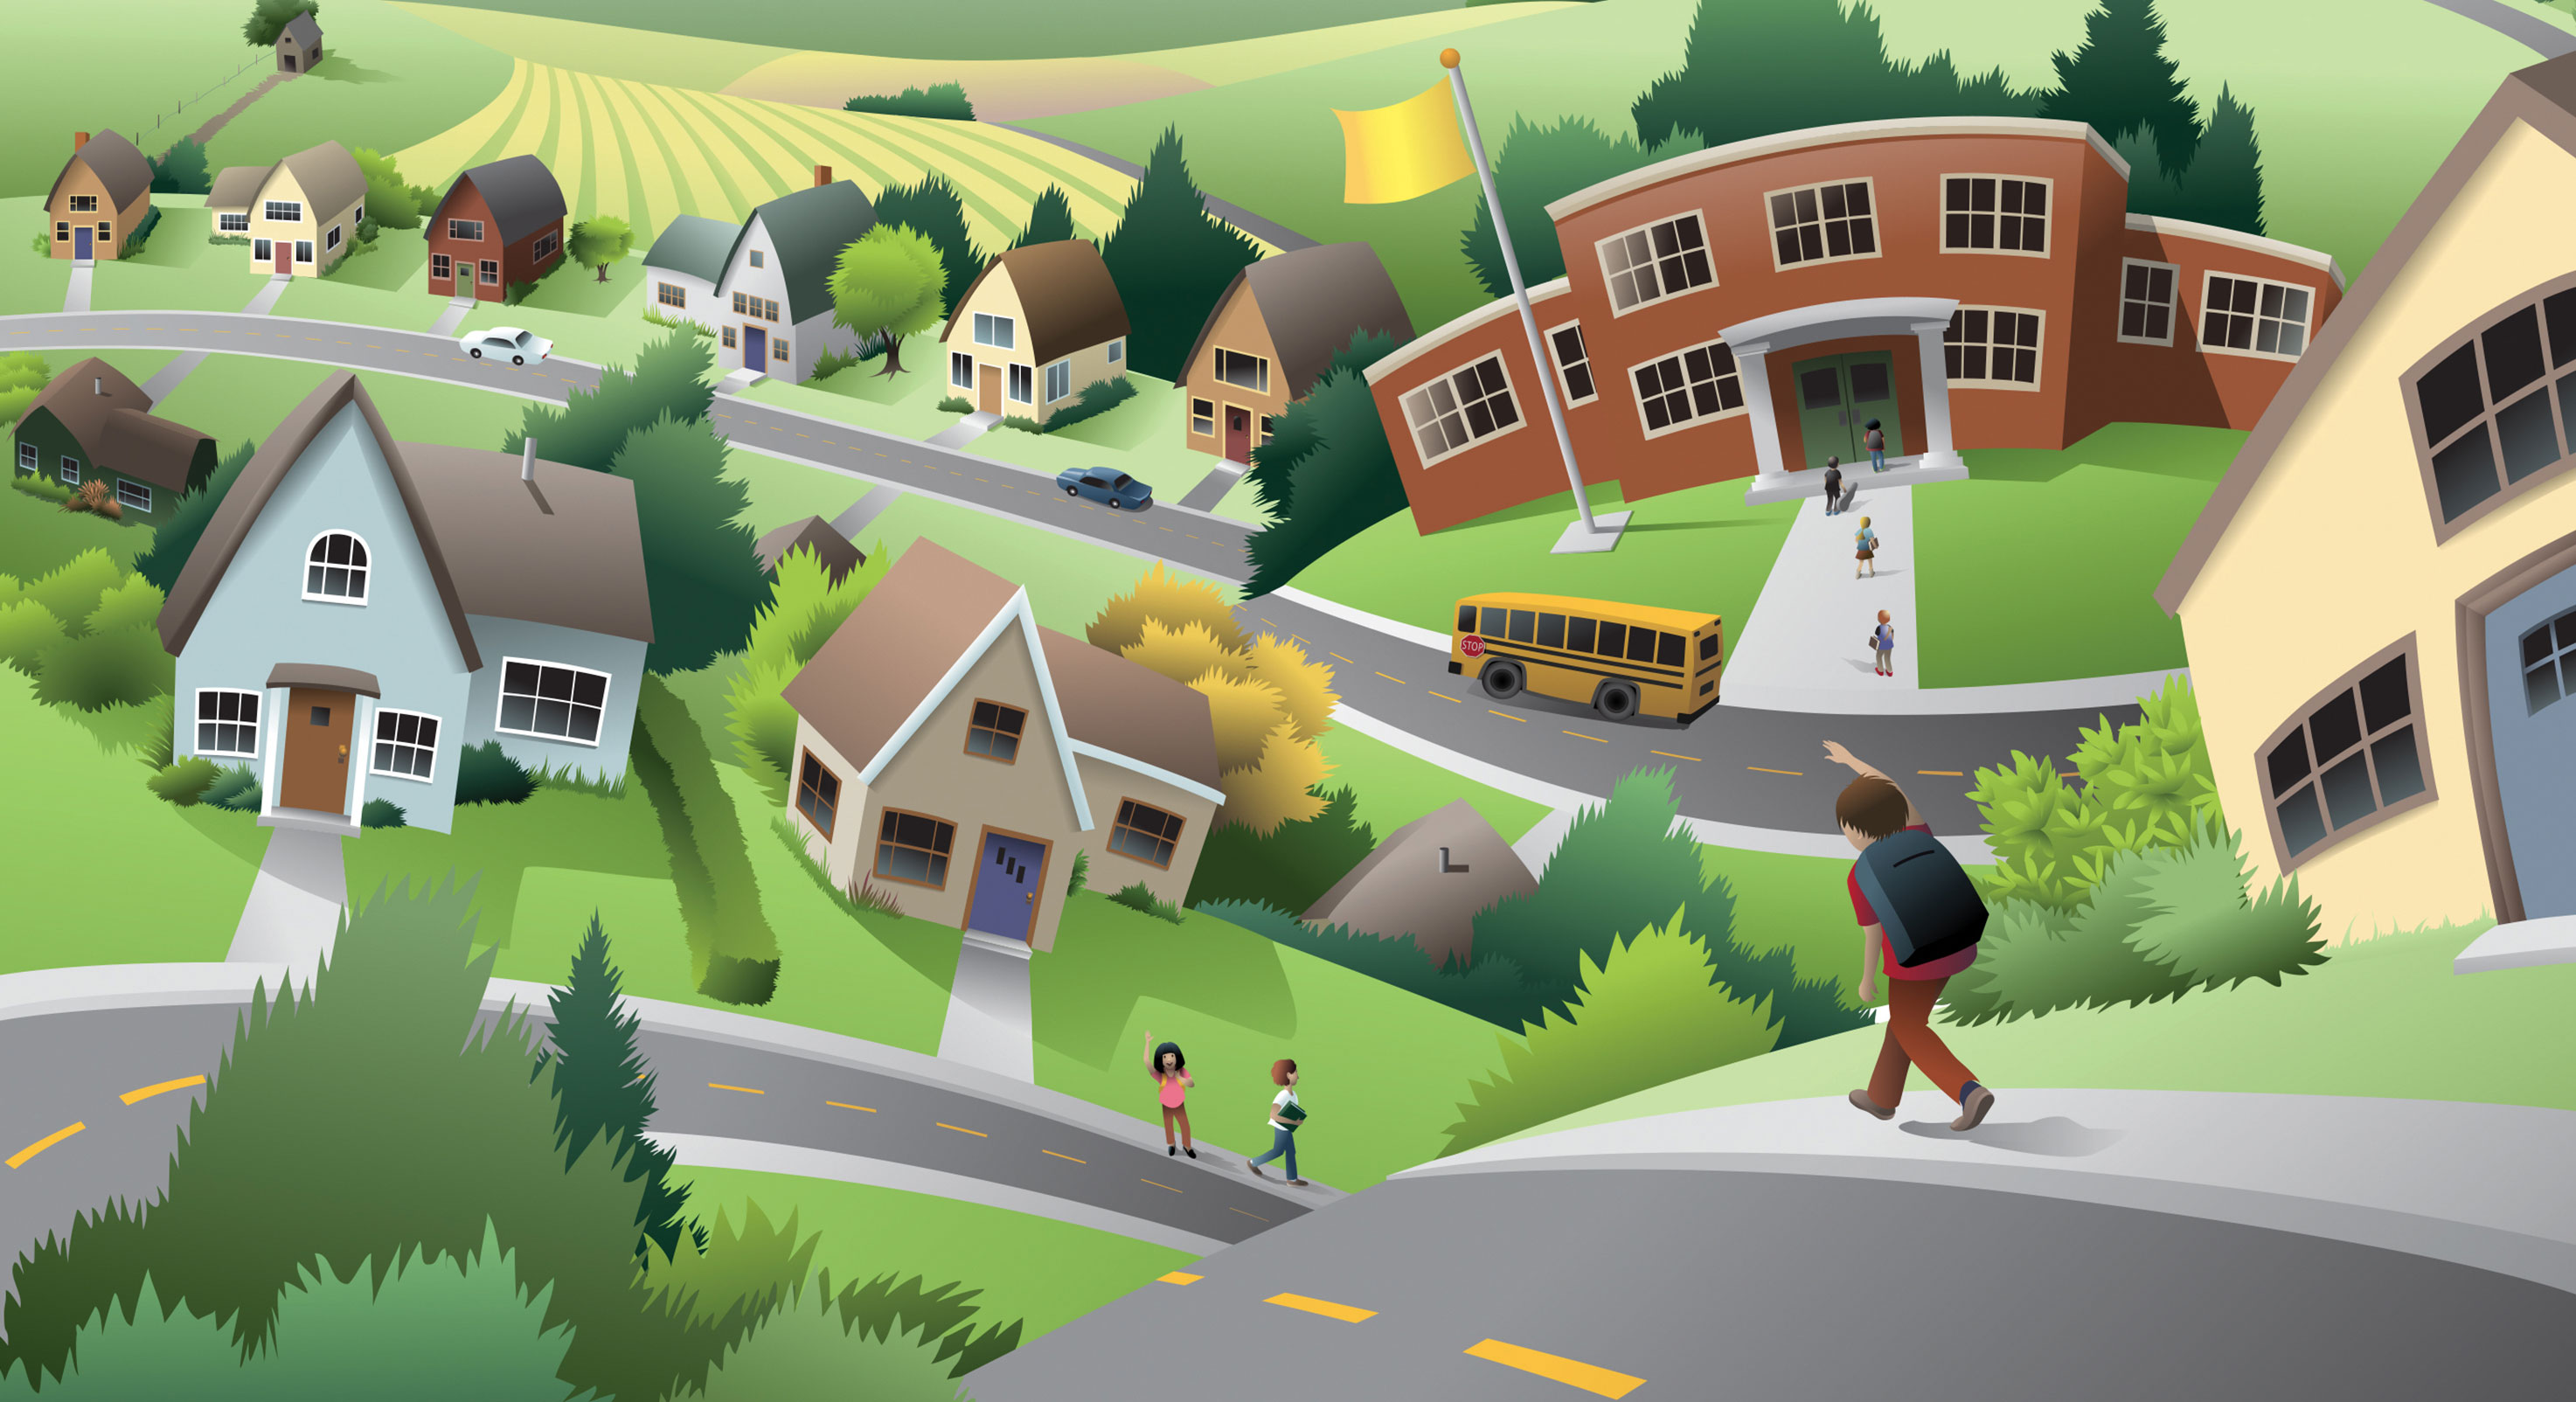 School-and-community-illustration-1